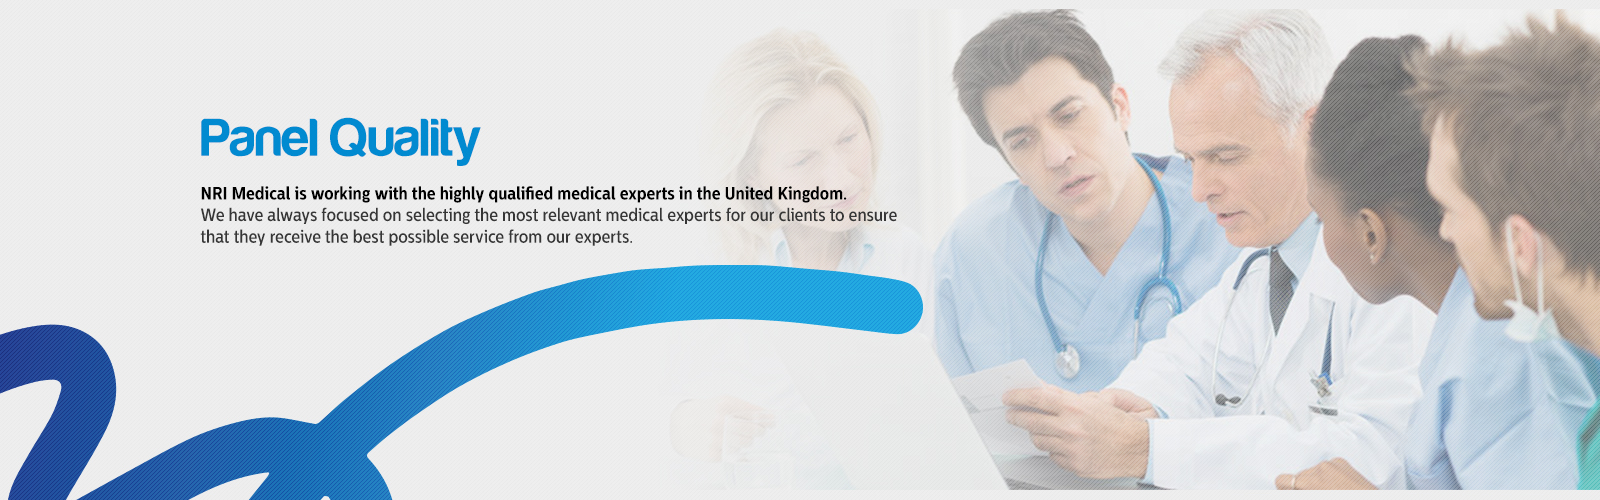 NRI_qualified medical experts_banner